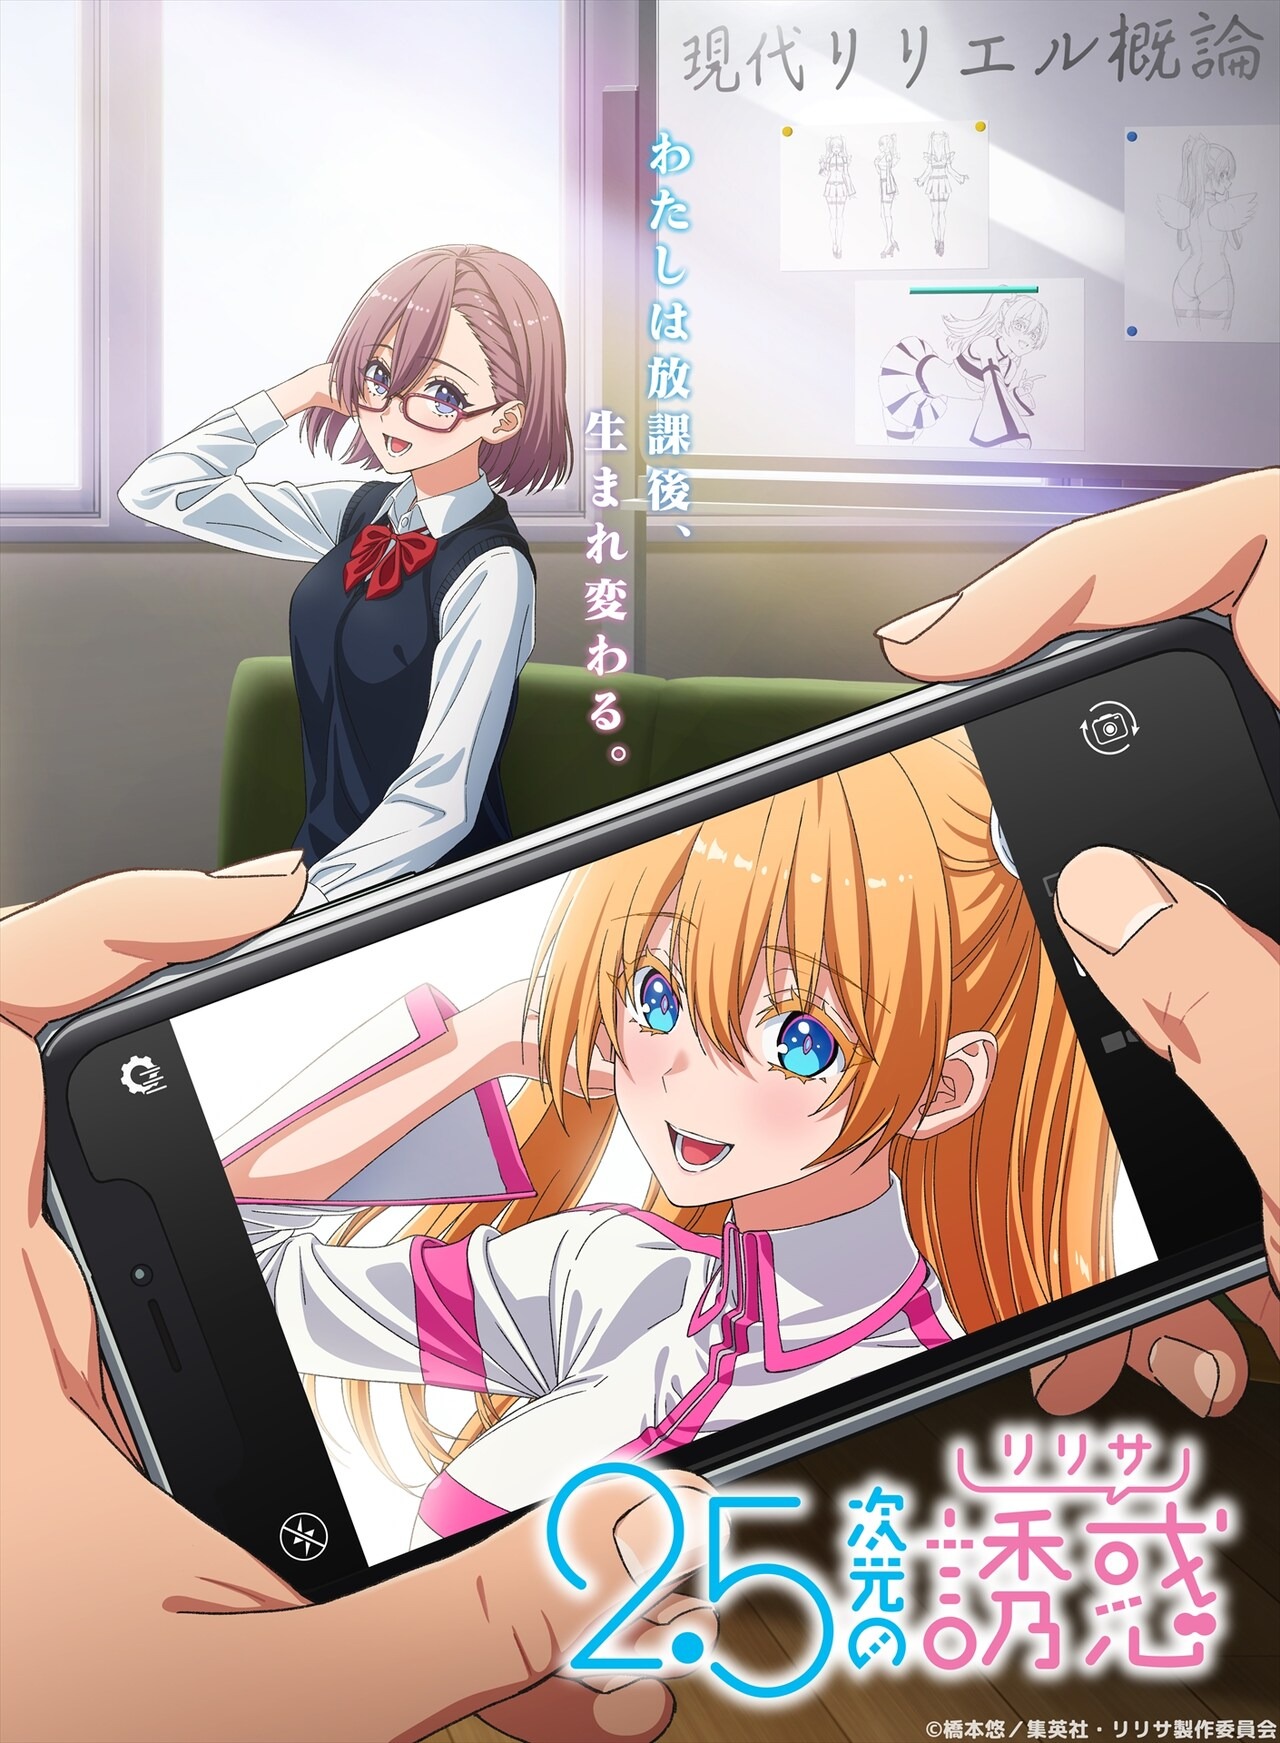 Manga Ecchi 2 5 Dimensional Seduction Tendrá Adaptación Al Anime